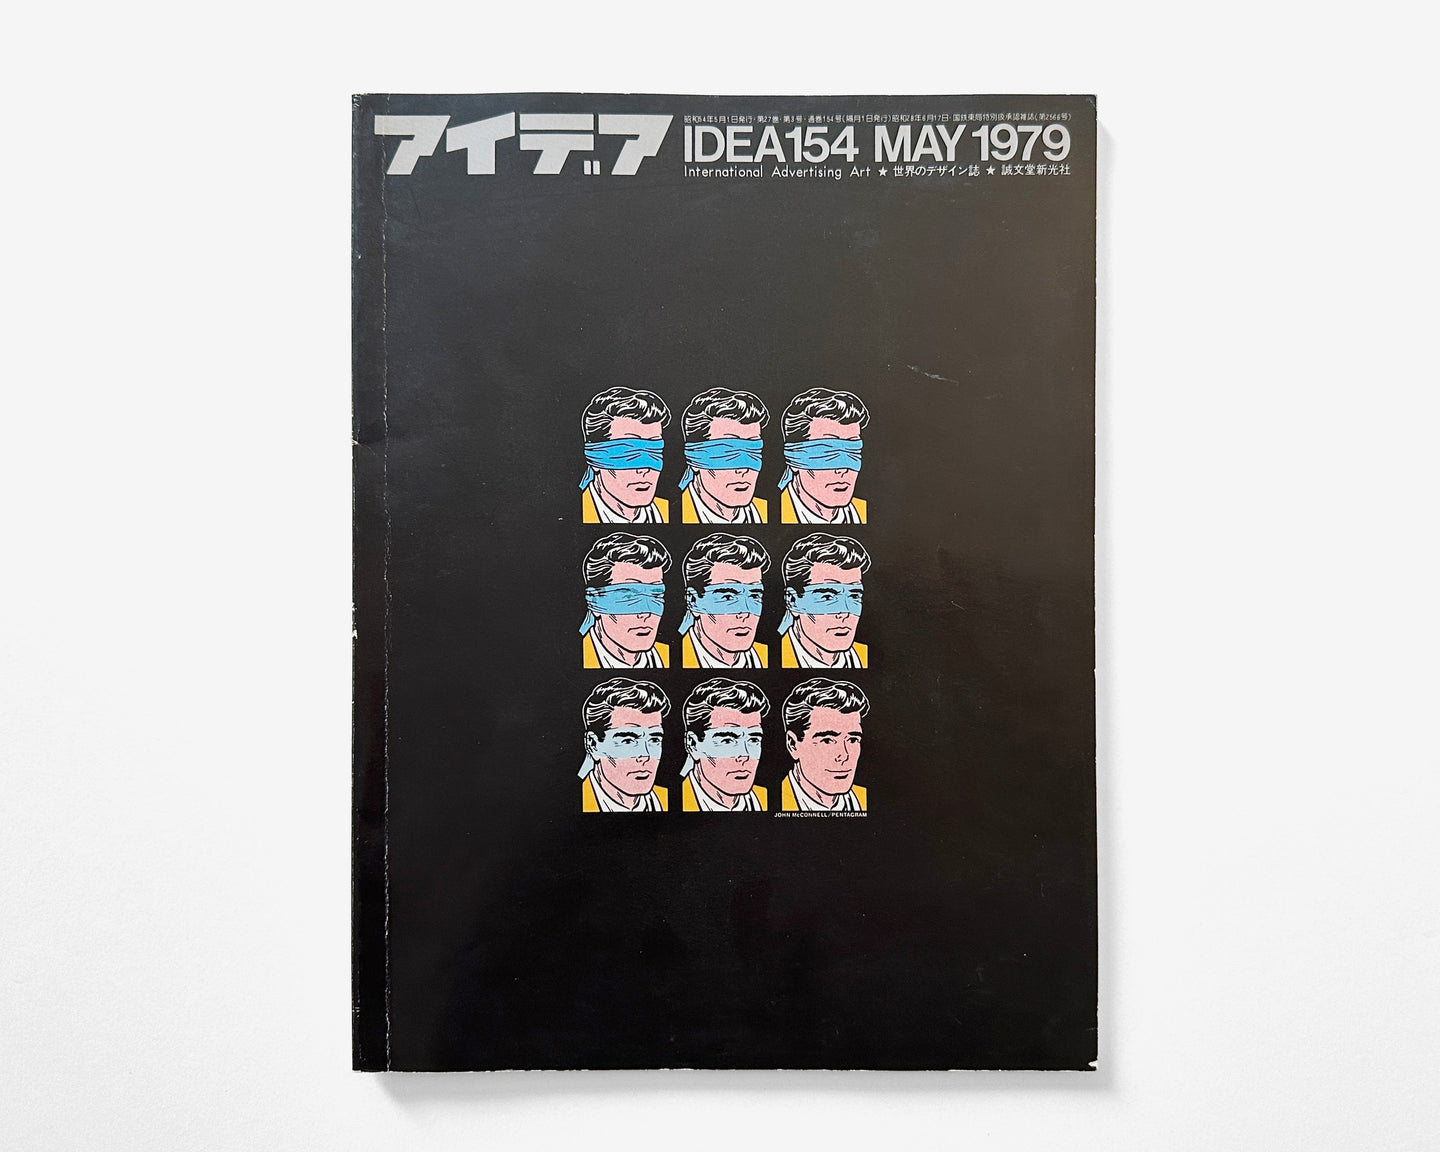 IDEA 154 — International Advertising Art Magazine, 1979 [John McConnell]